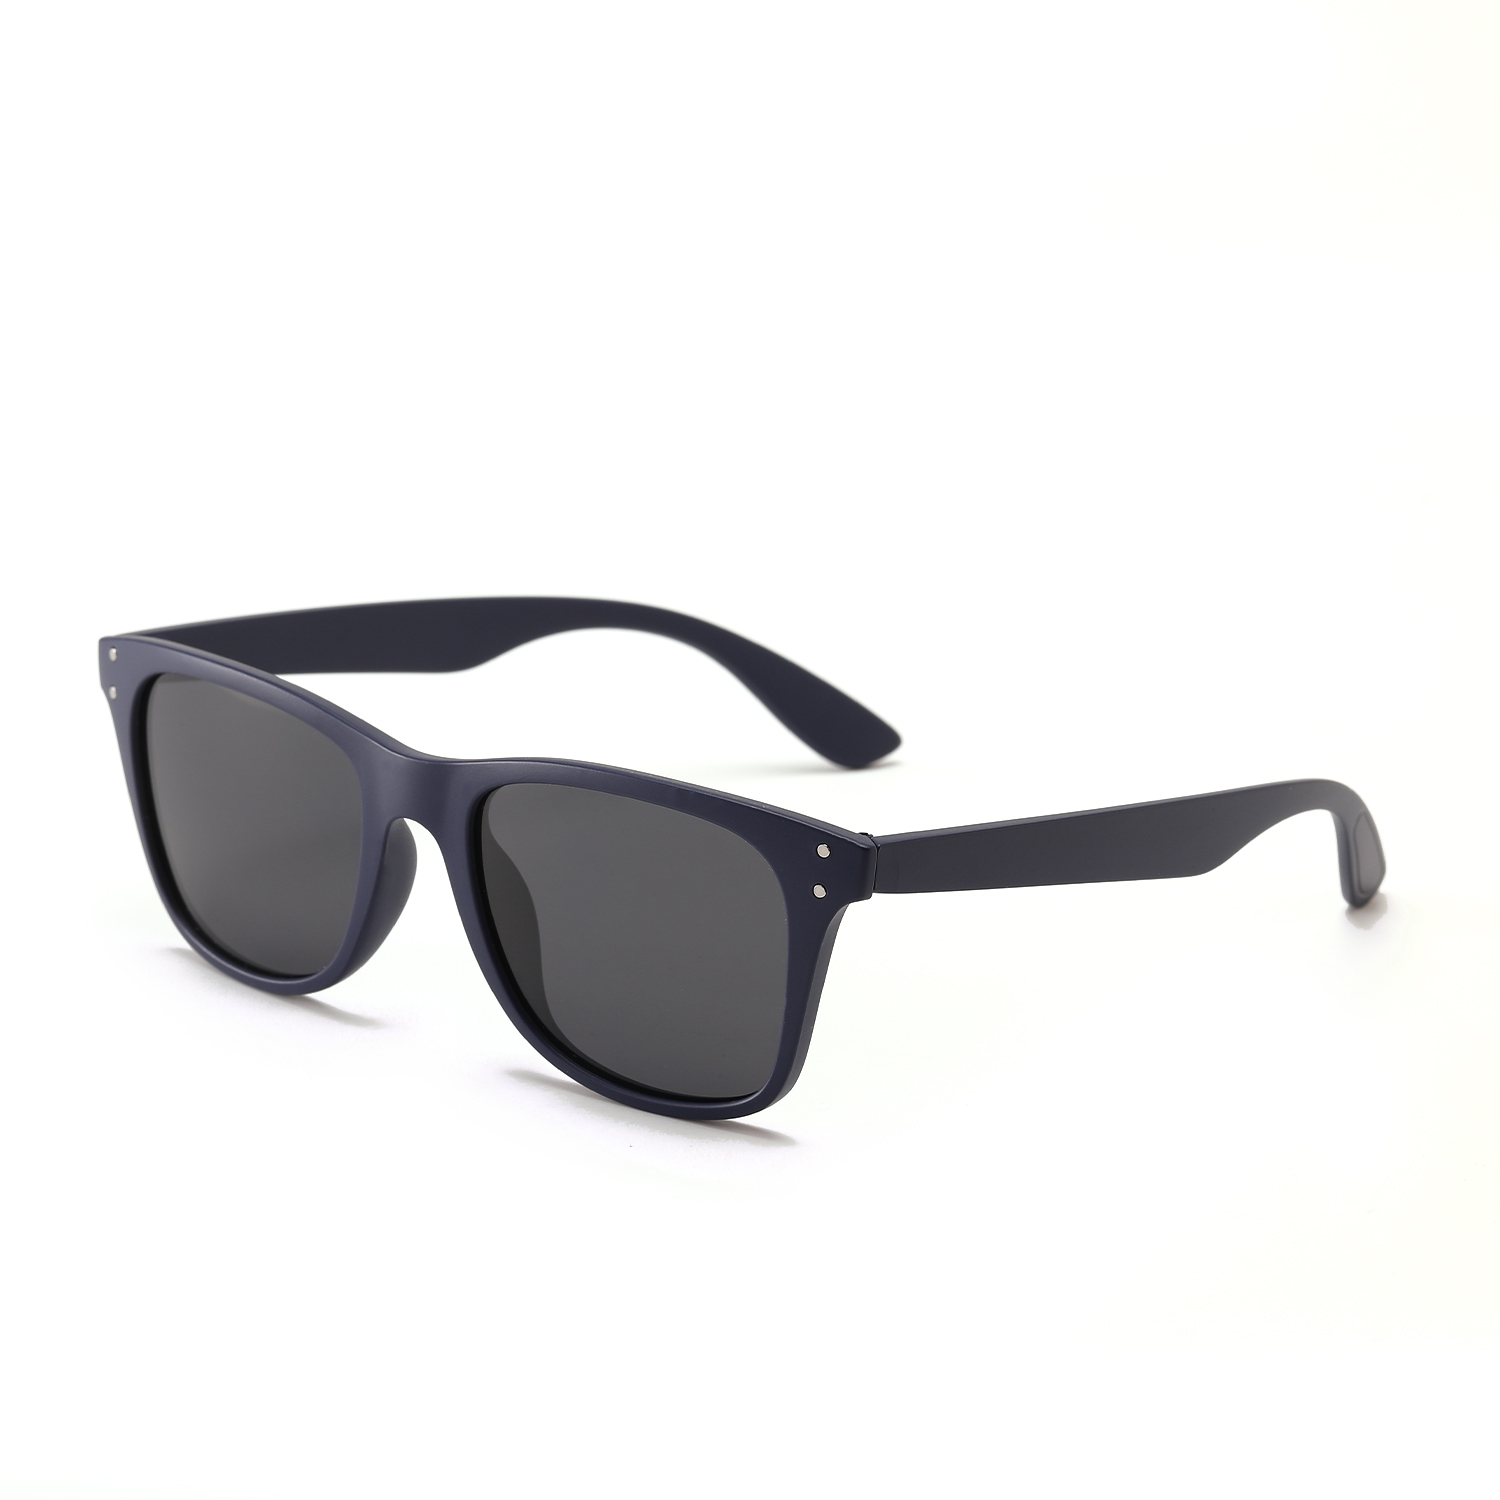 TR9175 fashion sunglasses